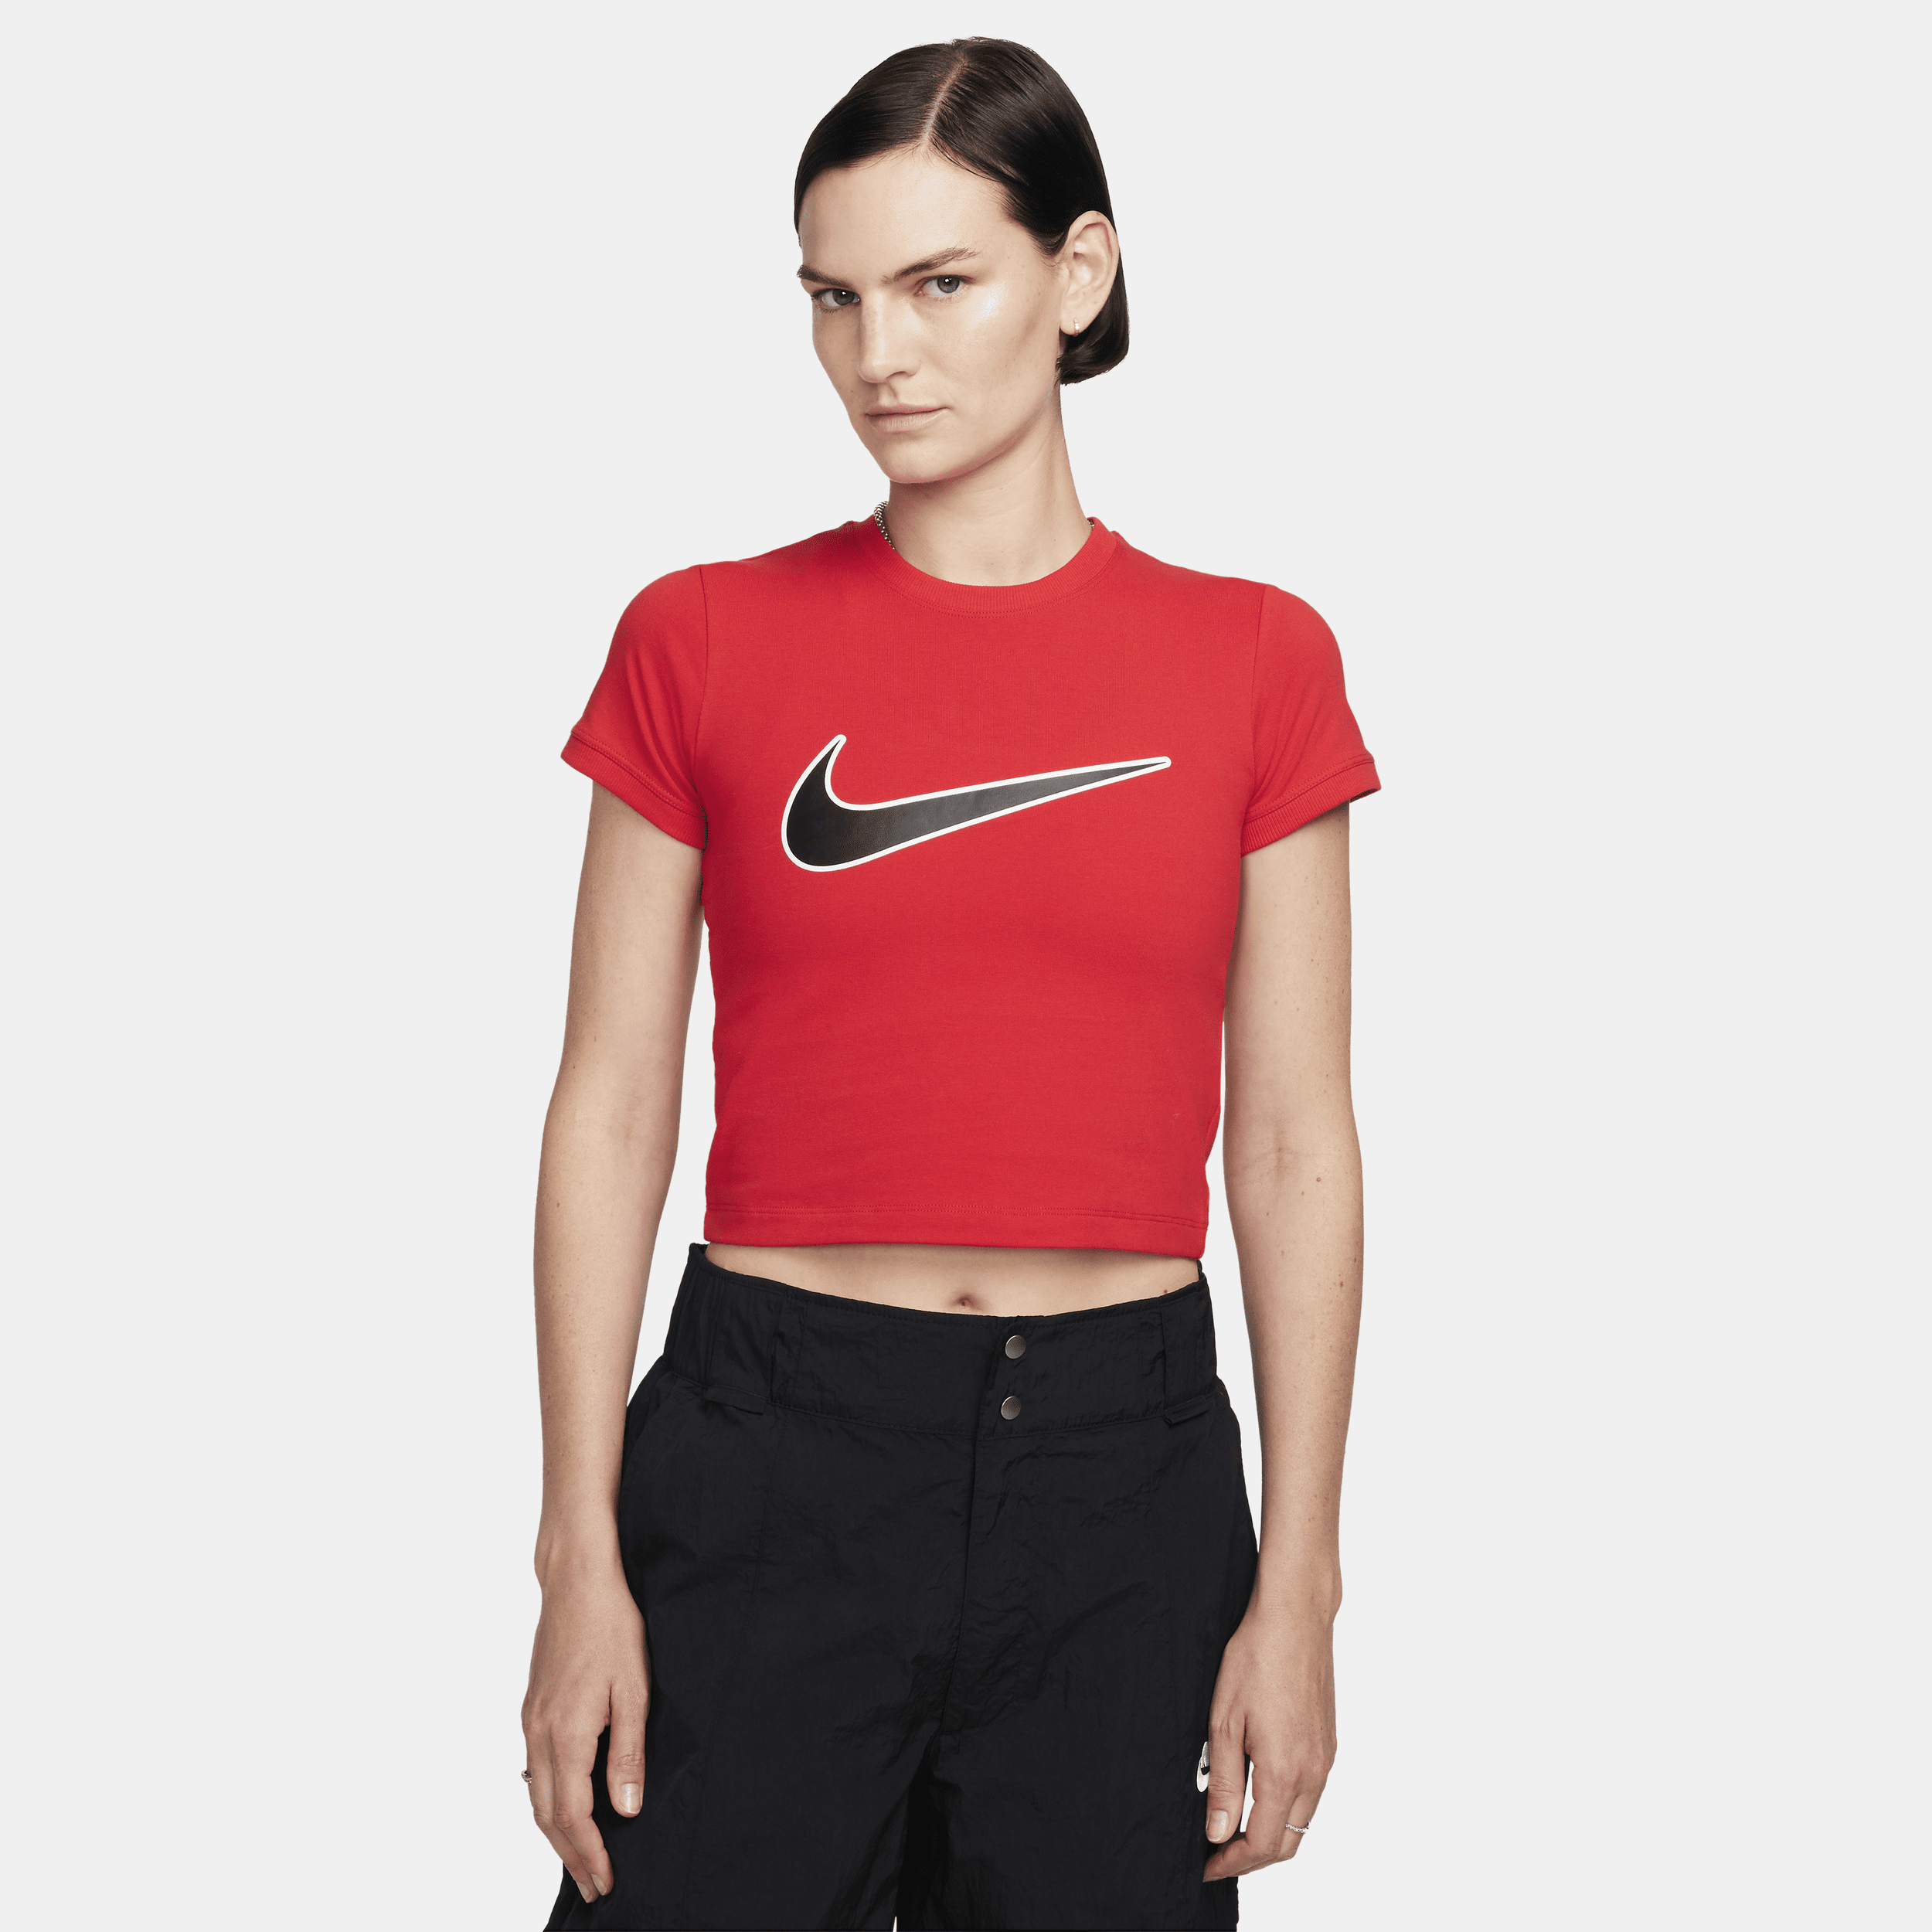 Kort Nike Sportswear-T-shirt til kvinder - rød